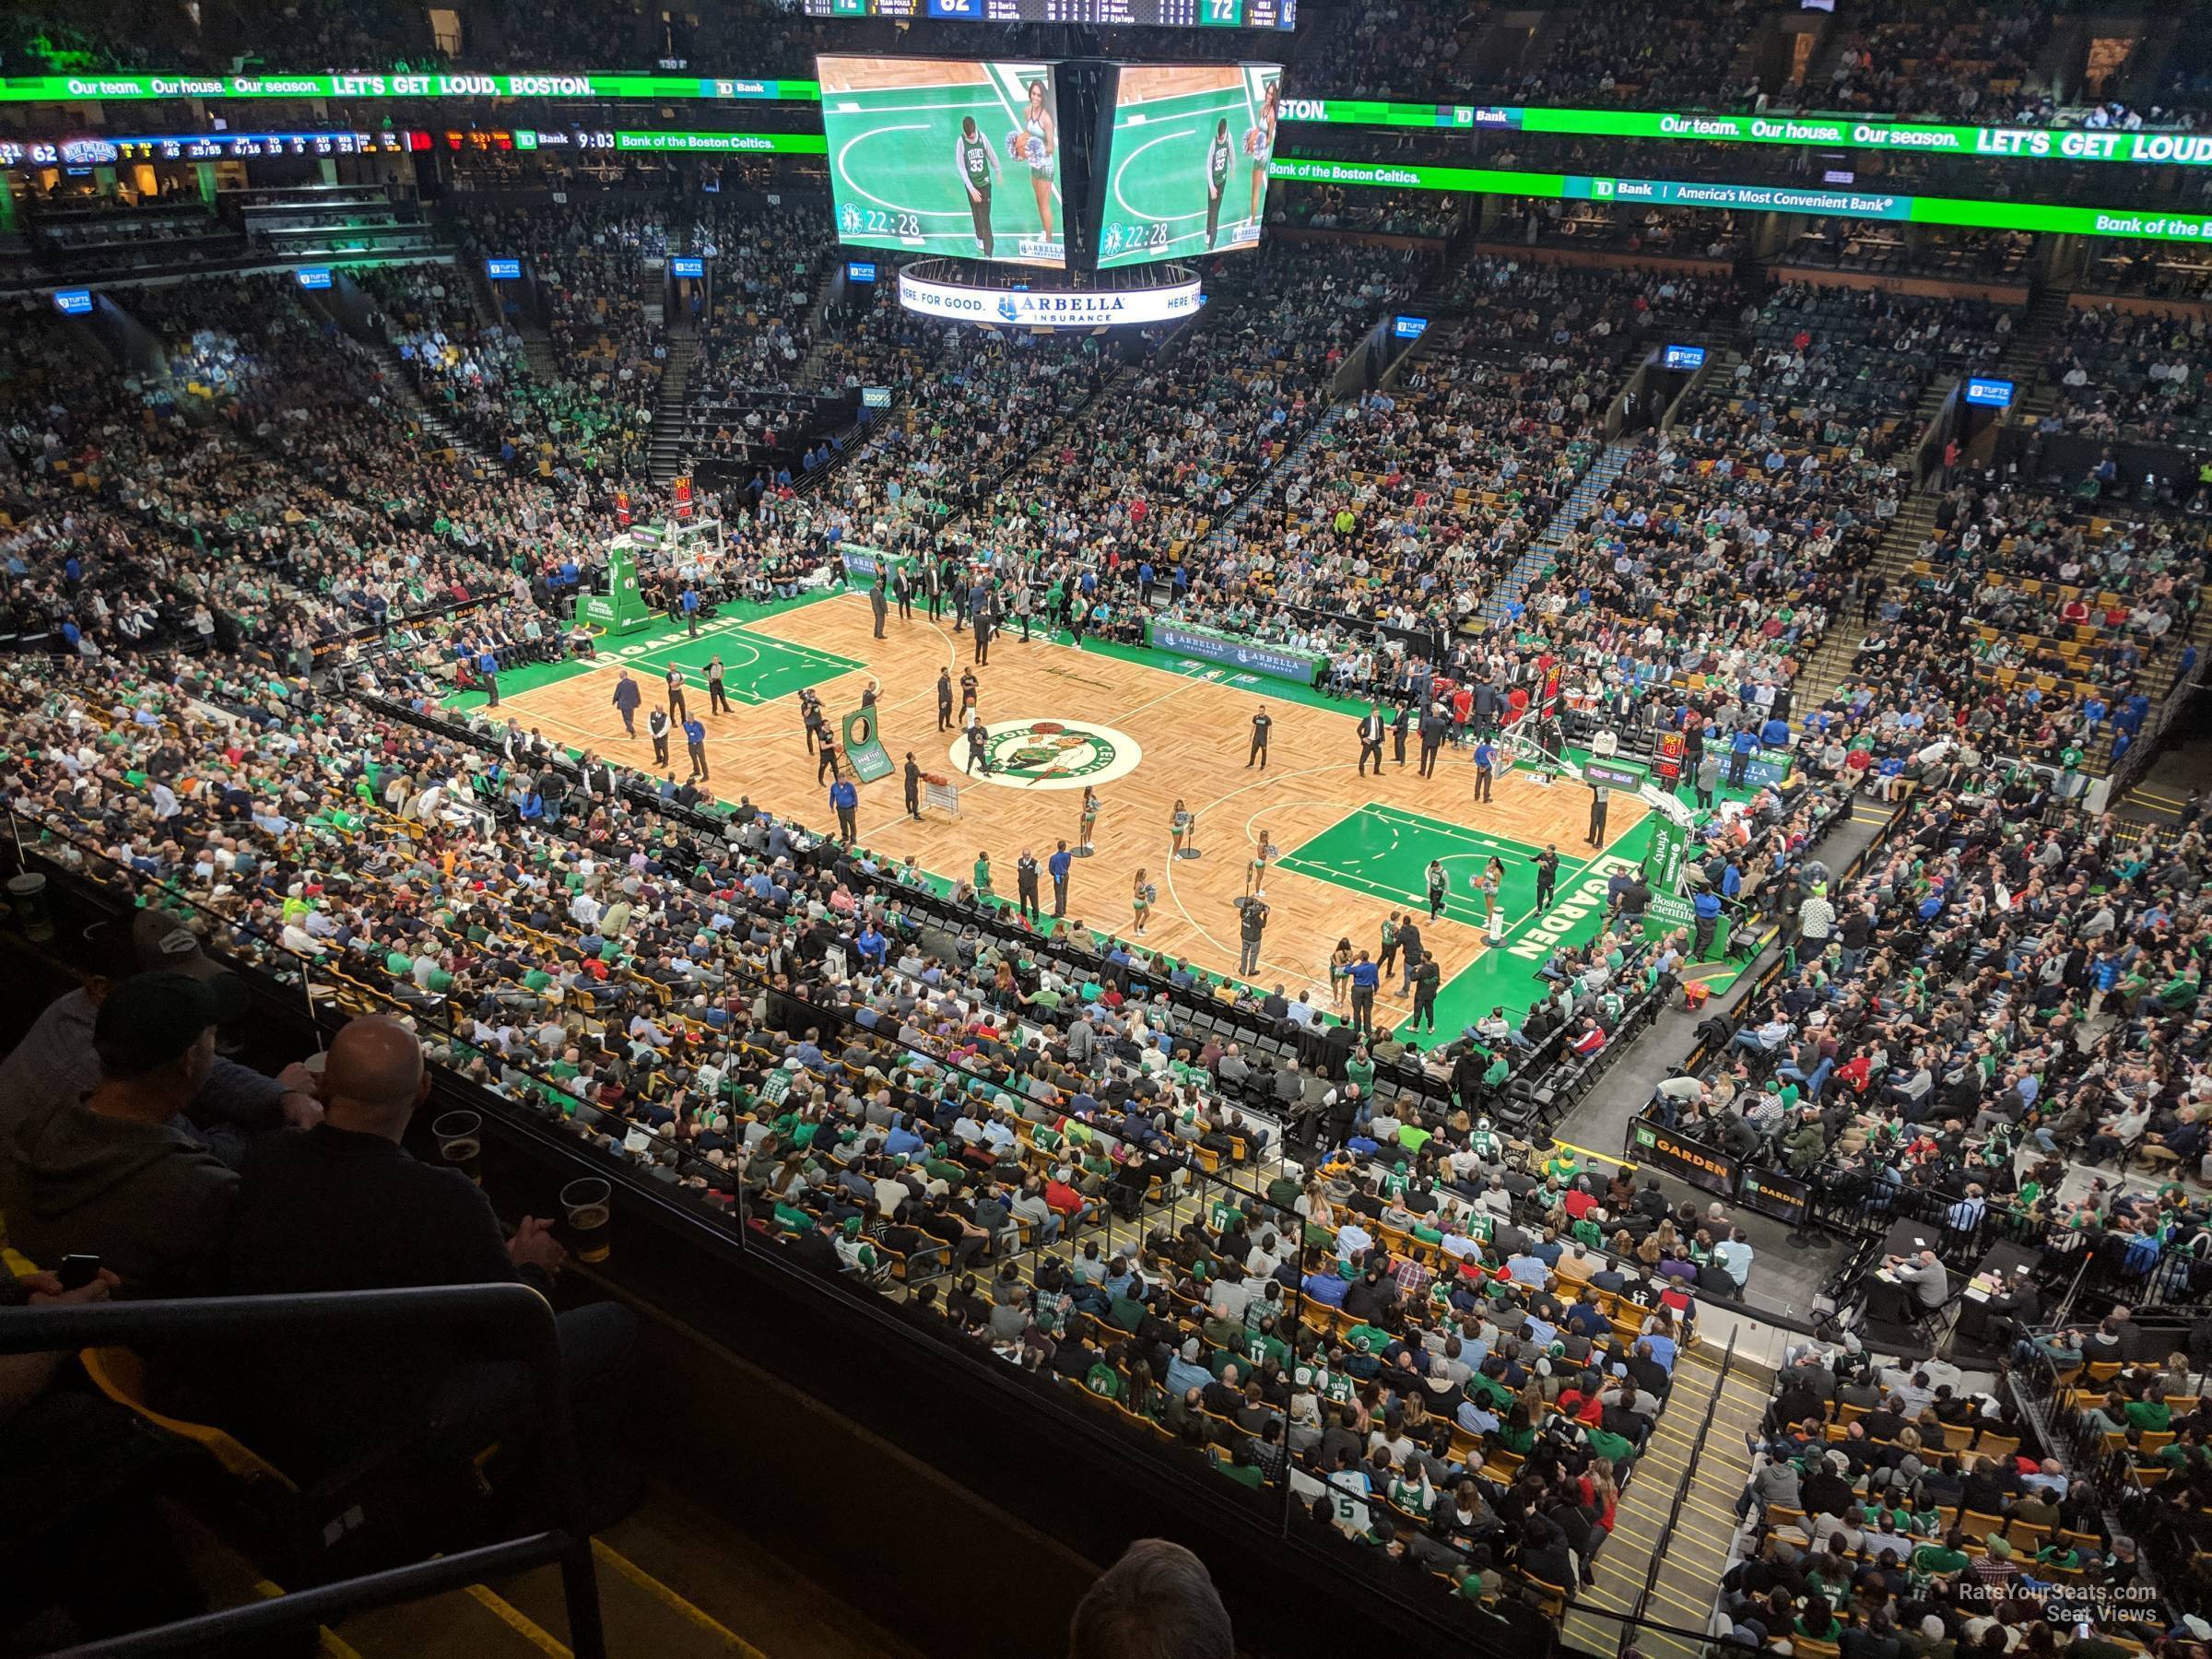 Td Garden Section 313 Boston Celtics Rateyourseats Com